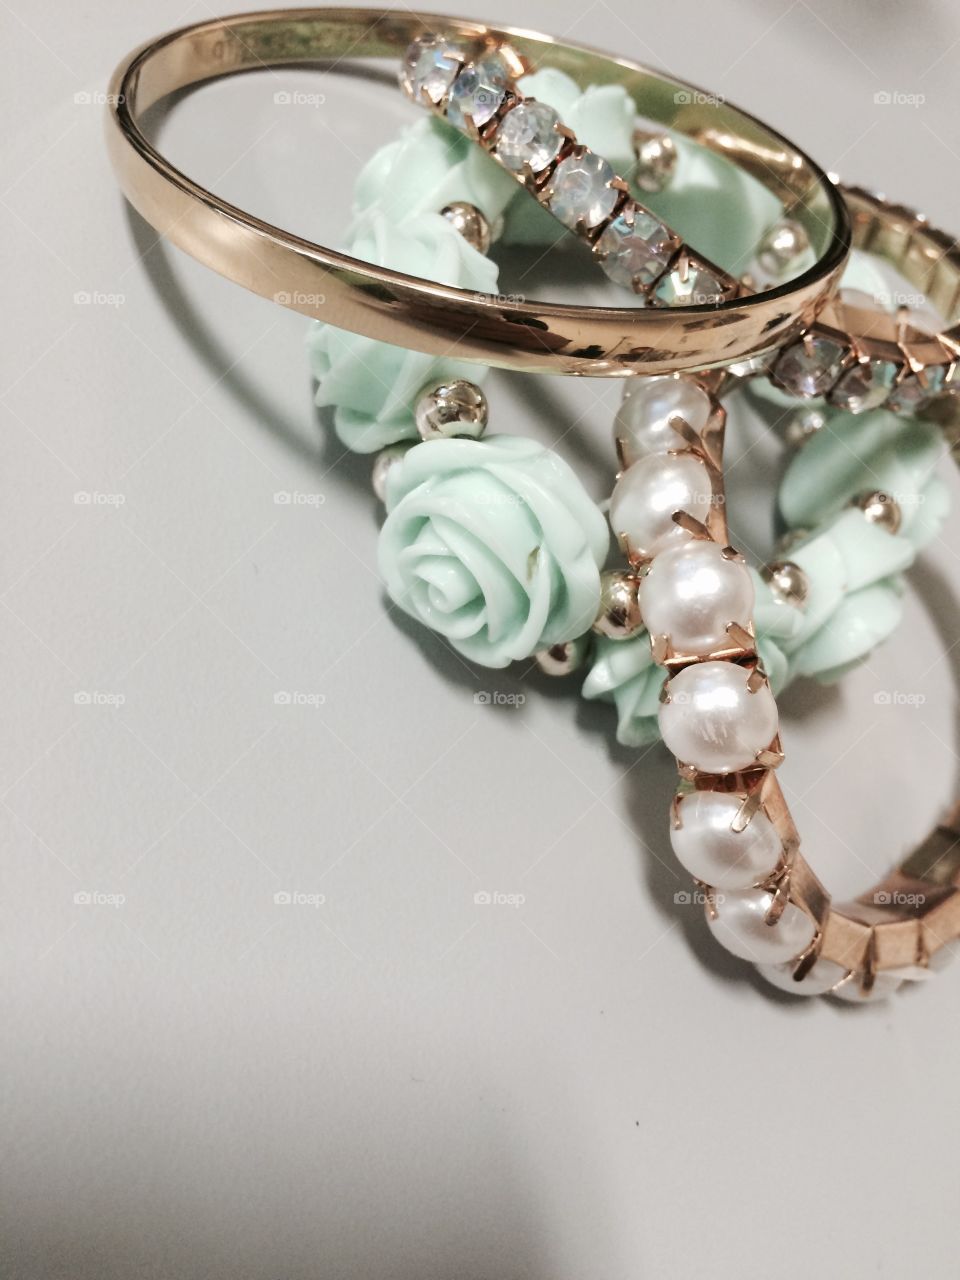 Bracelets are Classier. Bracelet and pearls